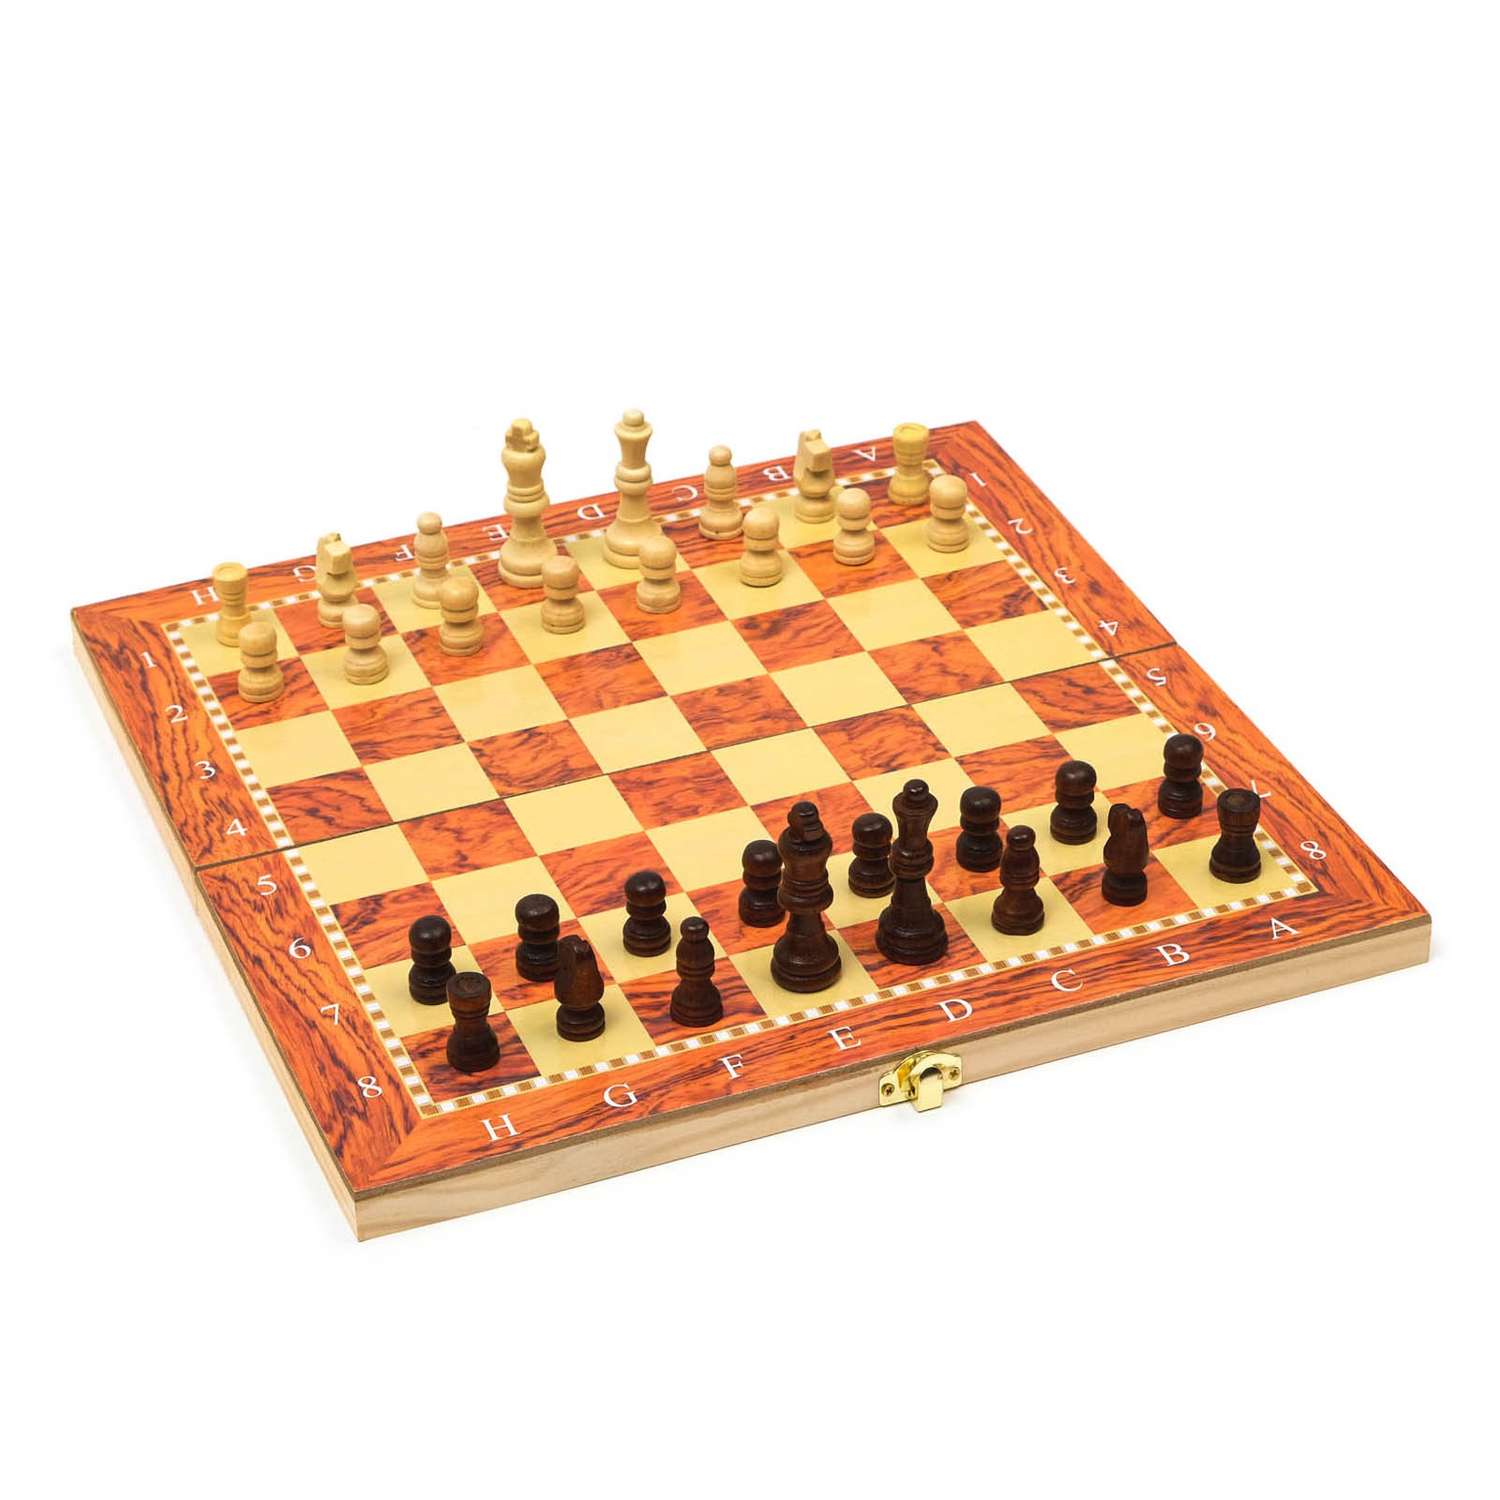 Настольная игра Sima-Land 3 в 1 «Падук» нарды шахматы шашки 34х34 см - фото 1